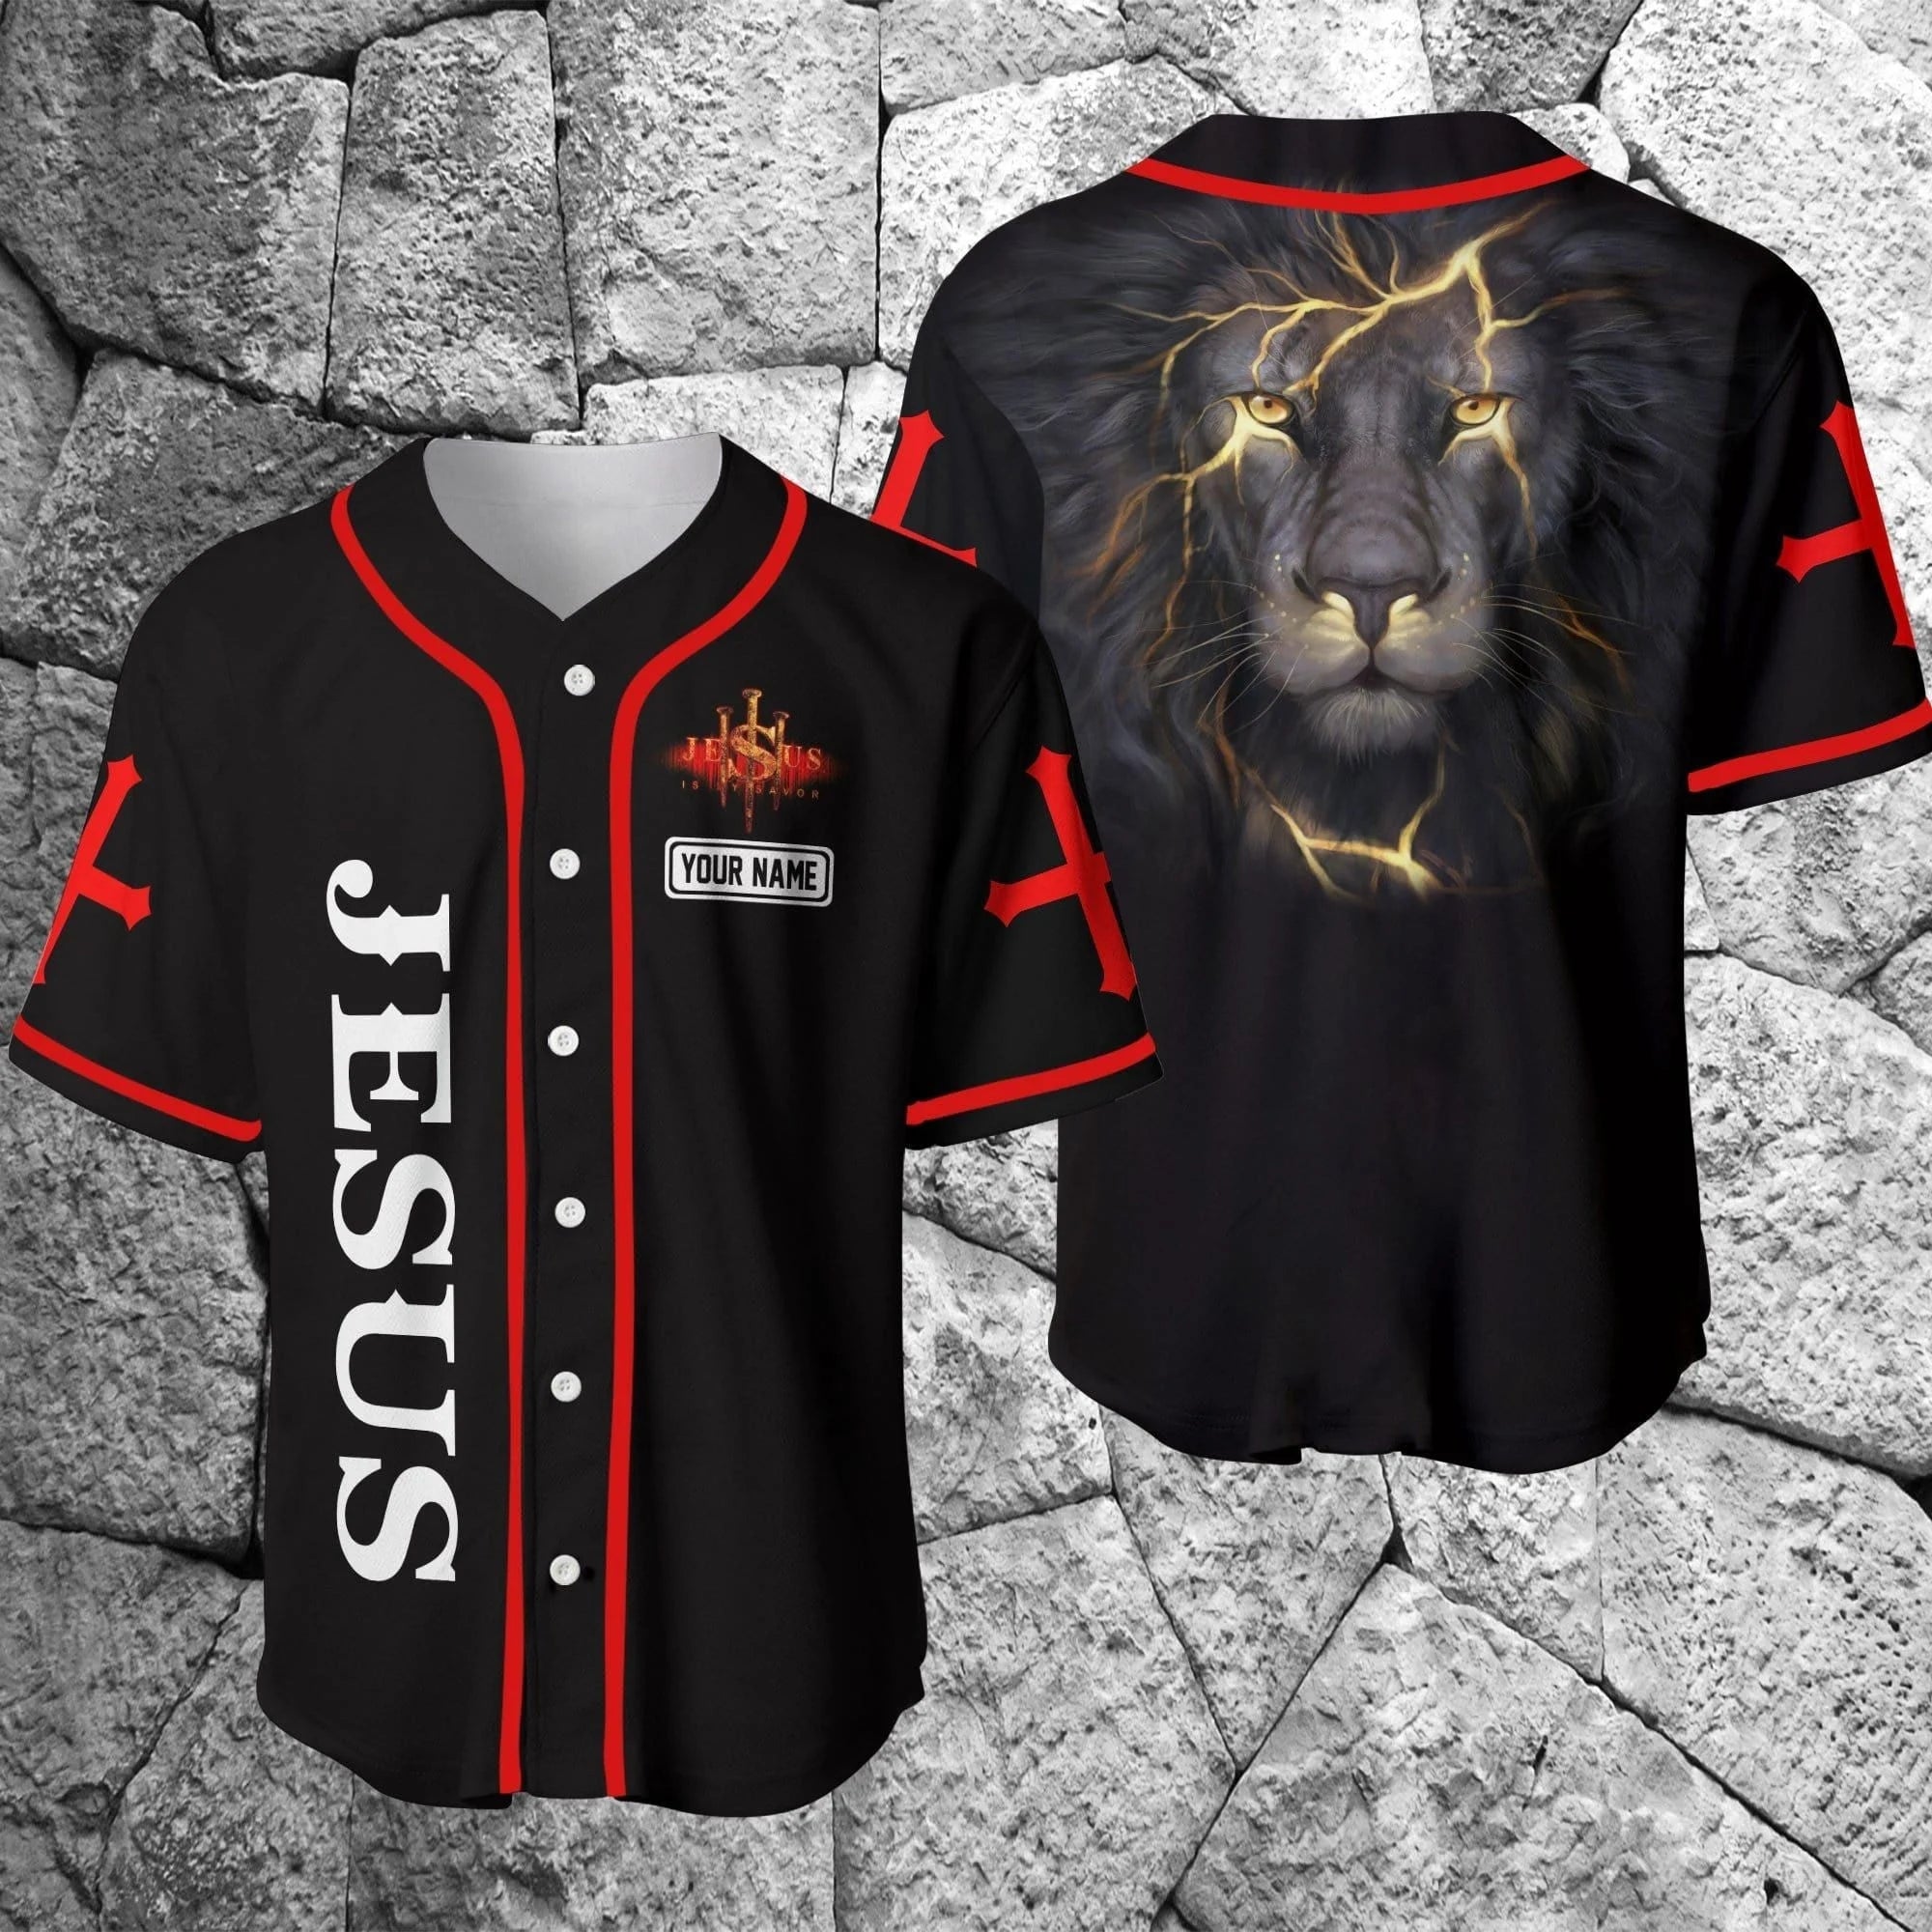 Personalized Jesus Baseball Jersey - Lion Baseball Jersey - Gift For Christians - Custom Printed 3D Baseball Jersey Shirt For Men and Women